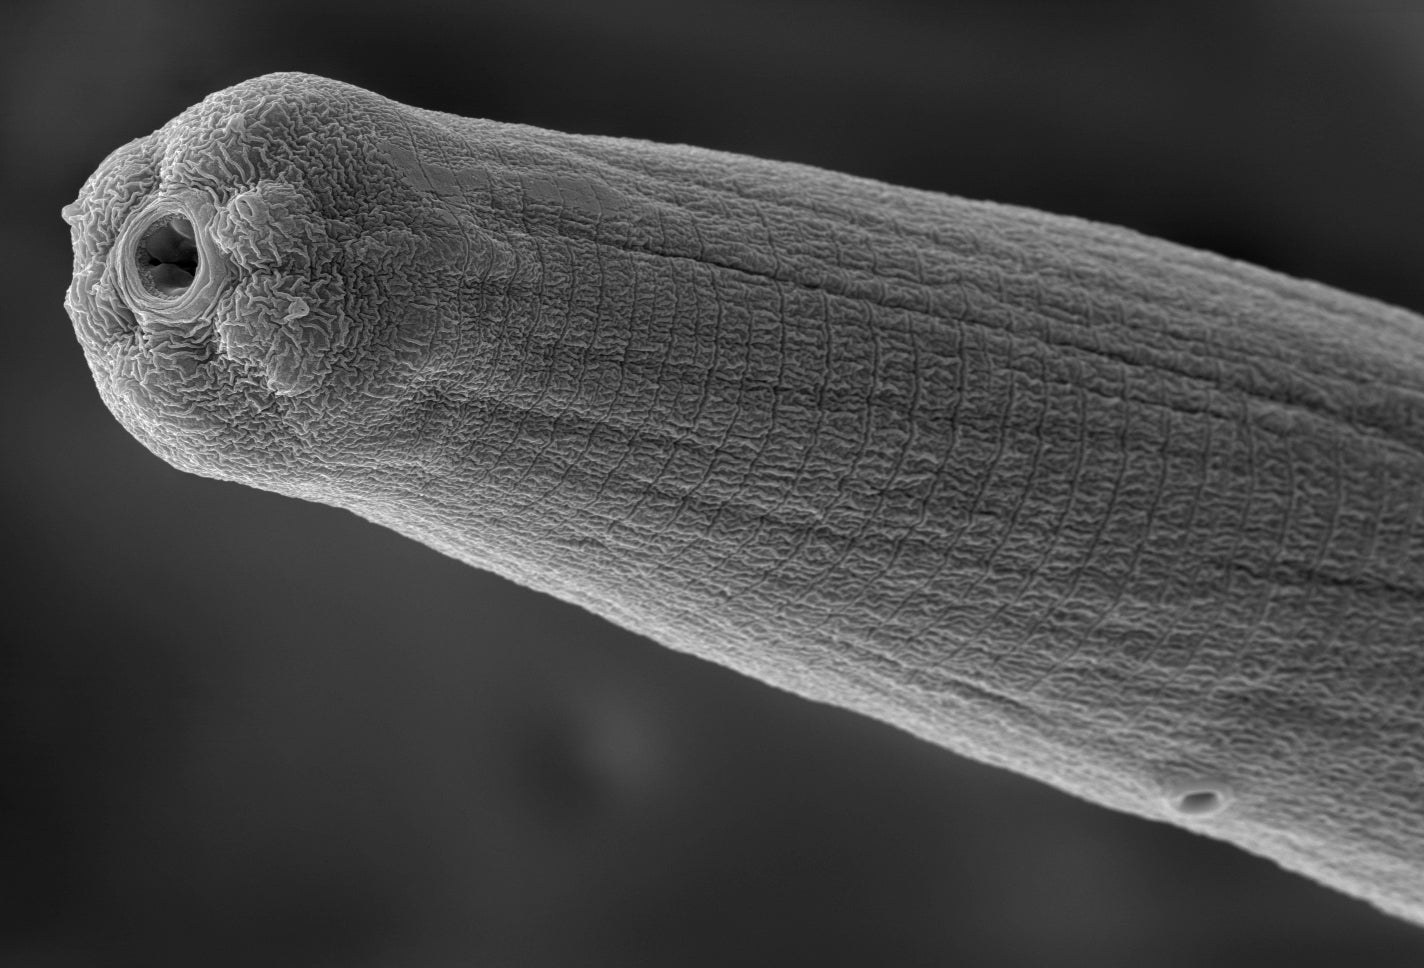 Parasitic worm venom evades human immune system